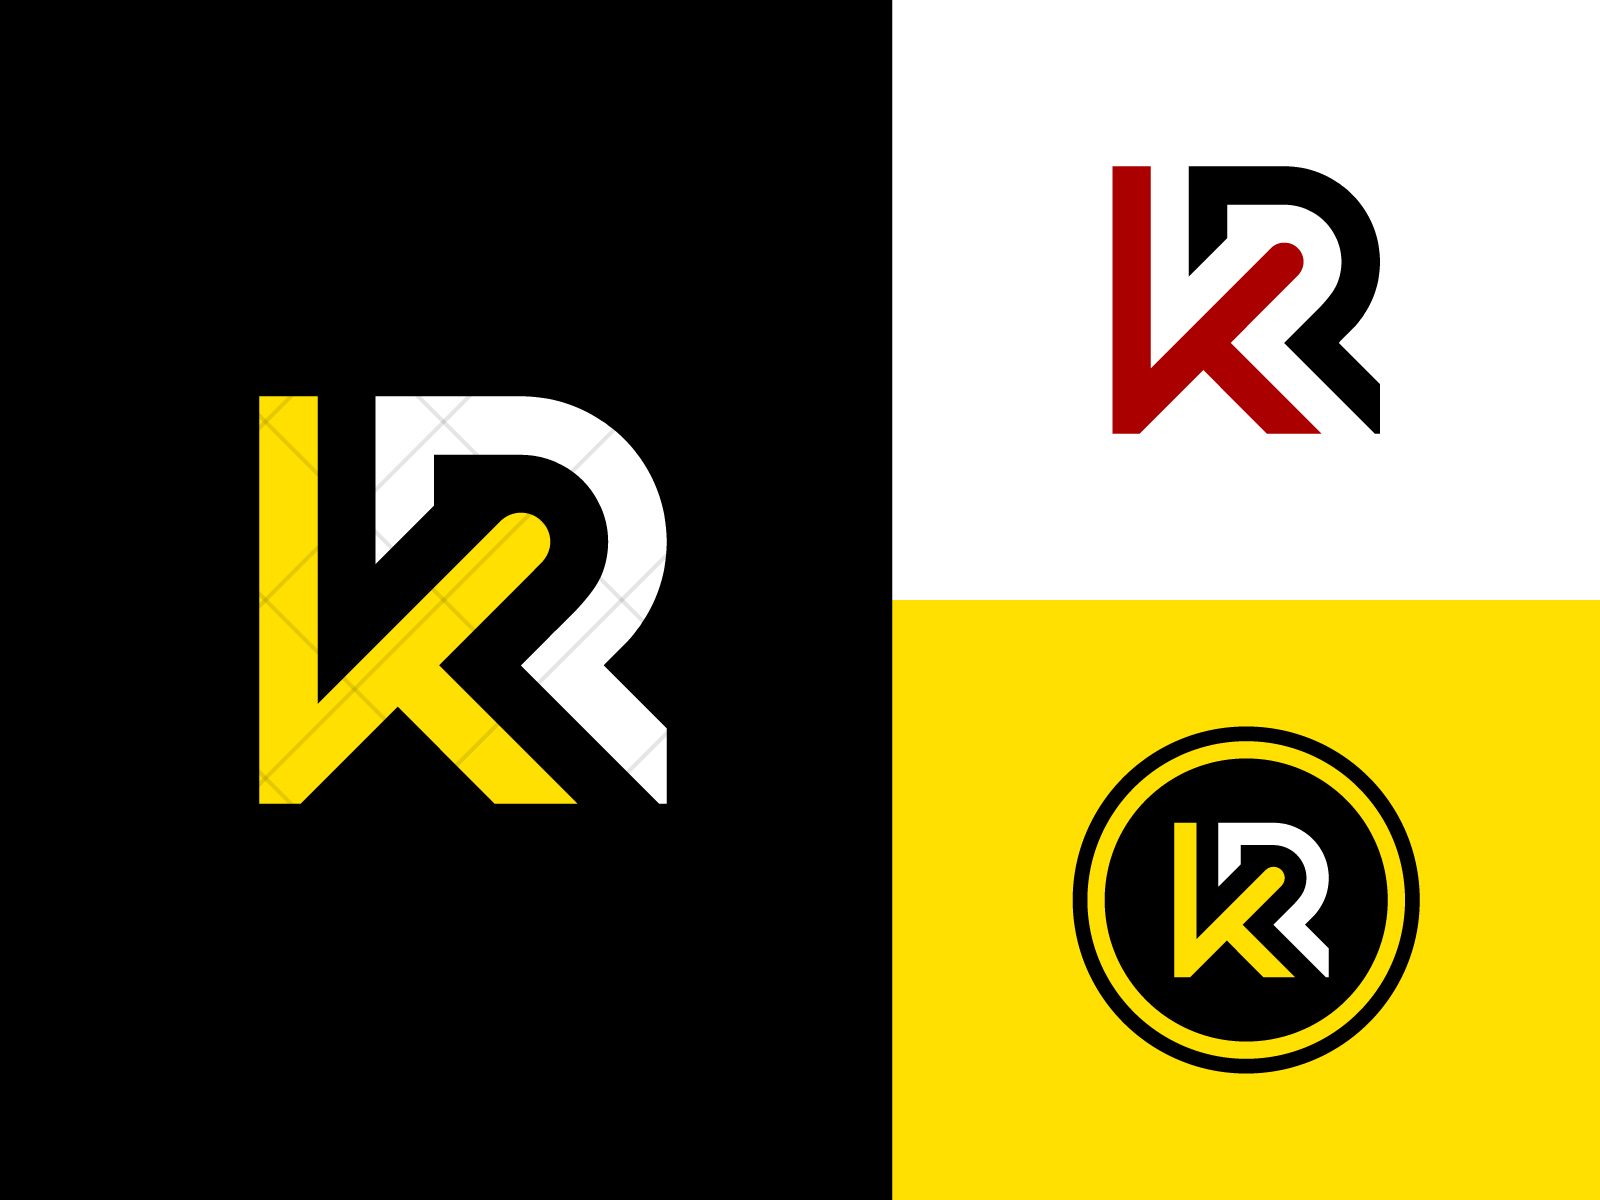 RK Logo by Phillip du Toit on Dribbble